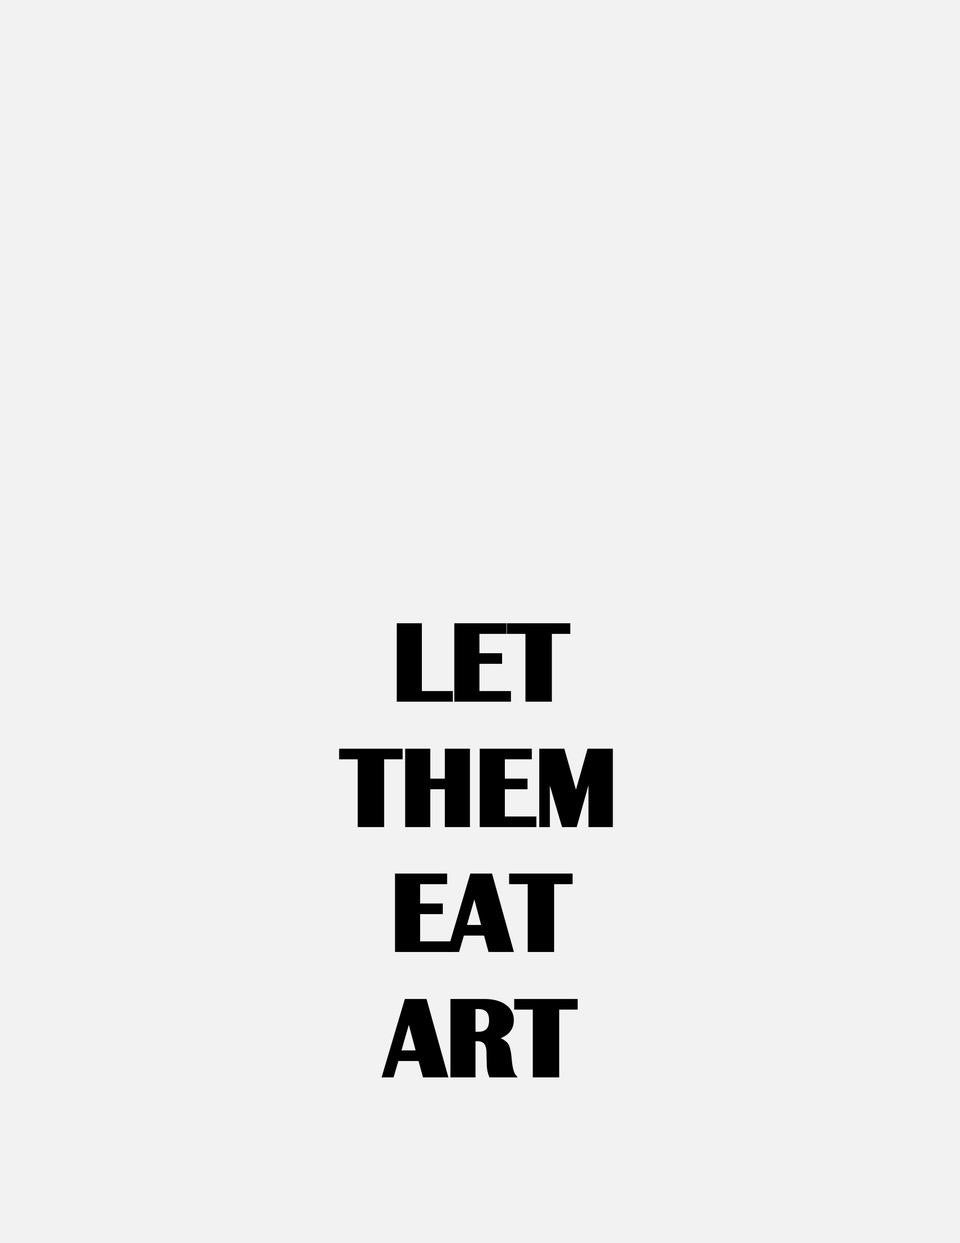 PlAYLIST - LET THEM EAT ART